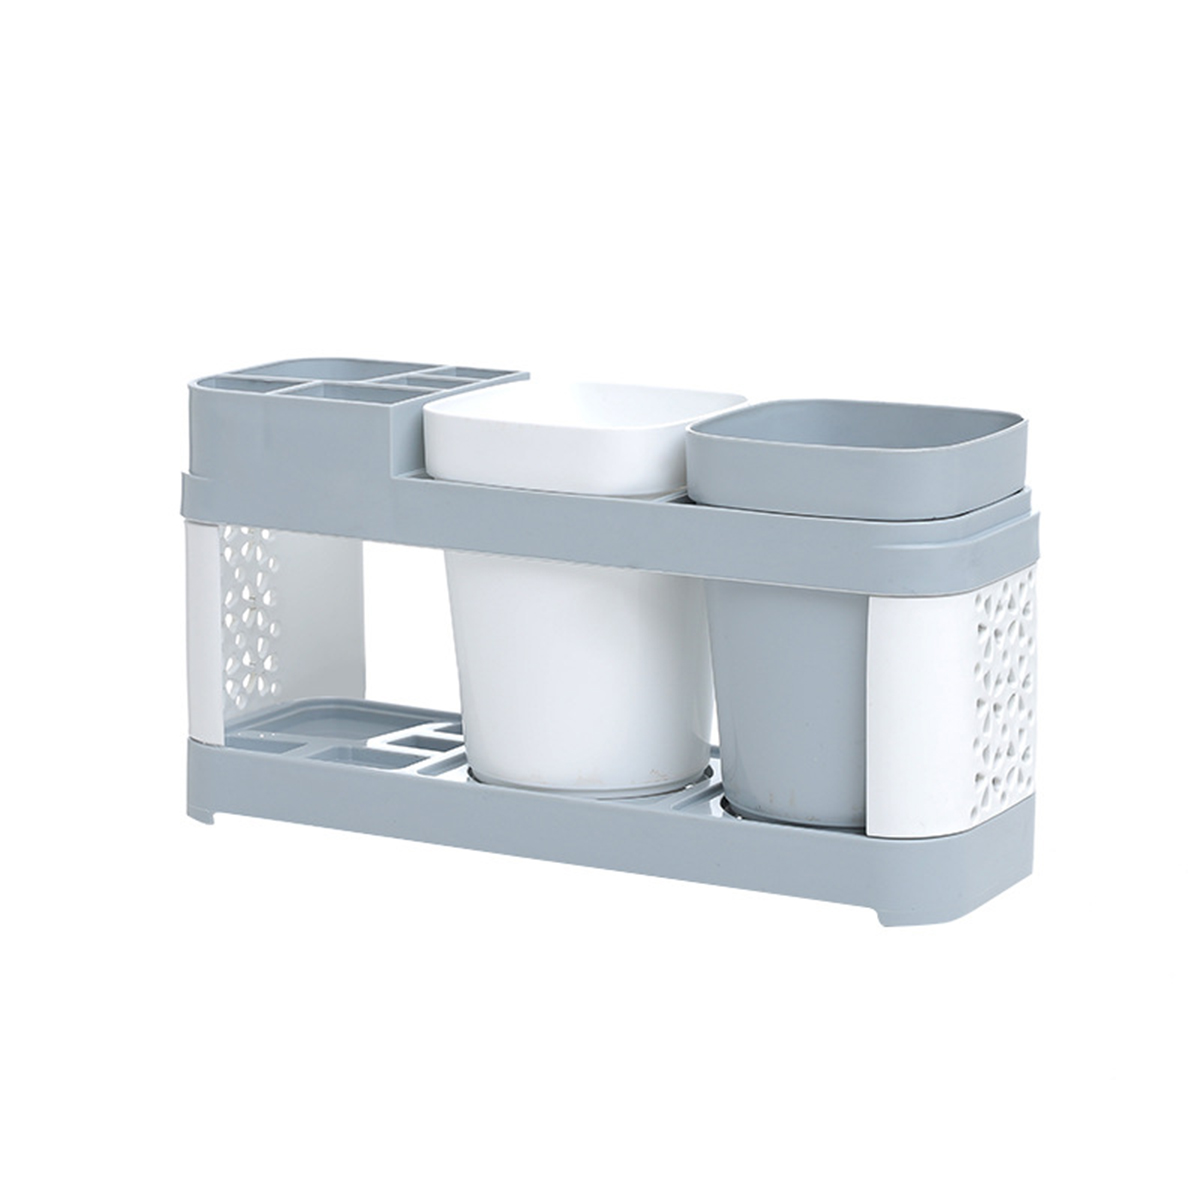 Toothbrush-Holder-Stand-Plastic-Cup-Set-Shelf-Bathroom-Toothpaste-Storage-Rack-1402010-6